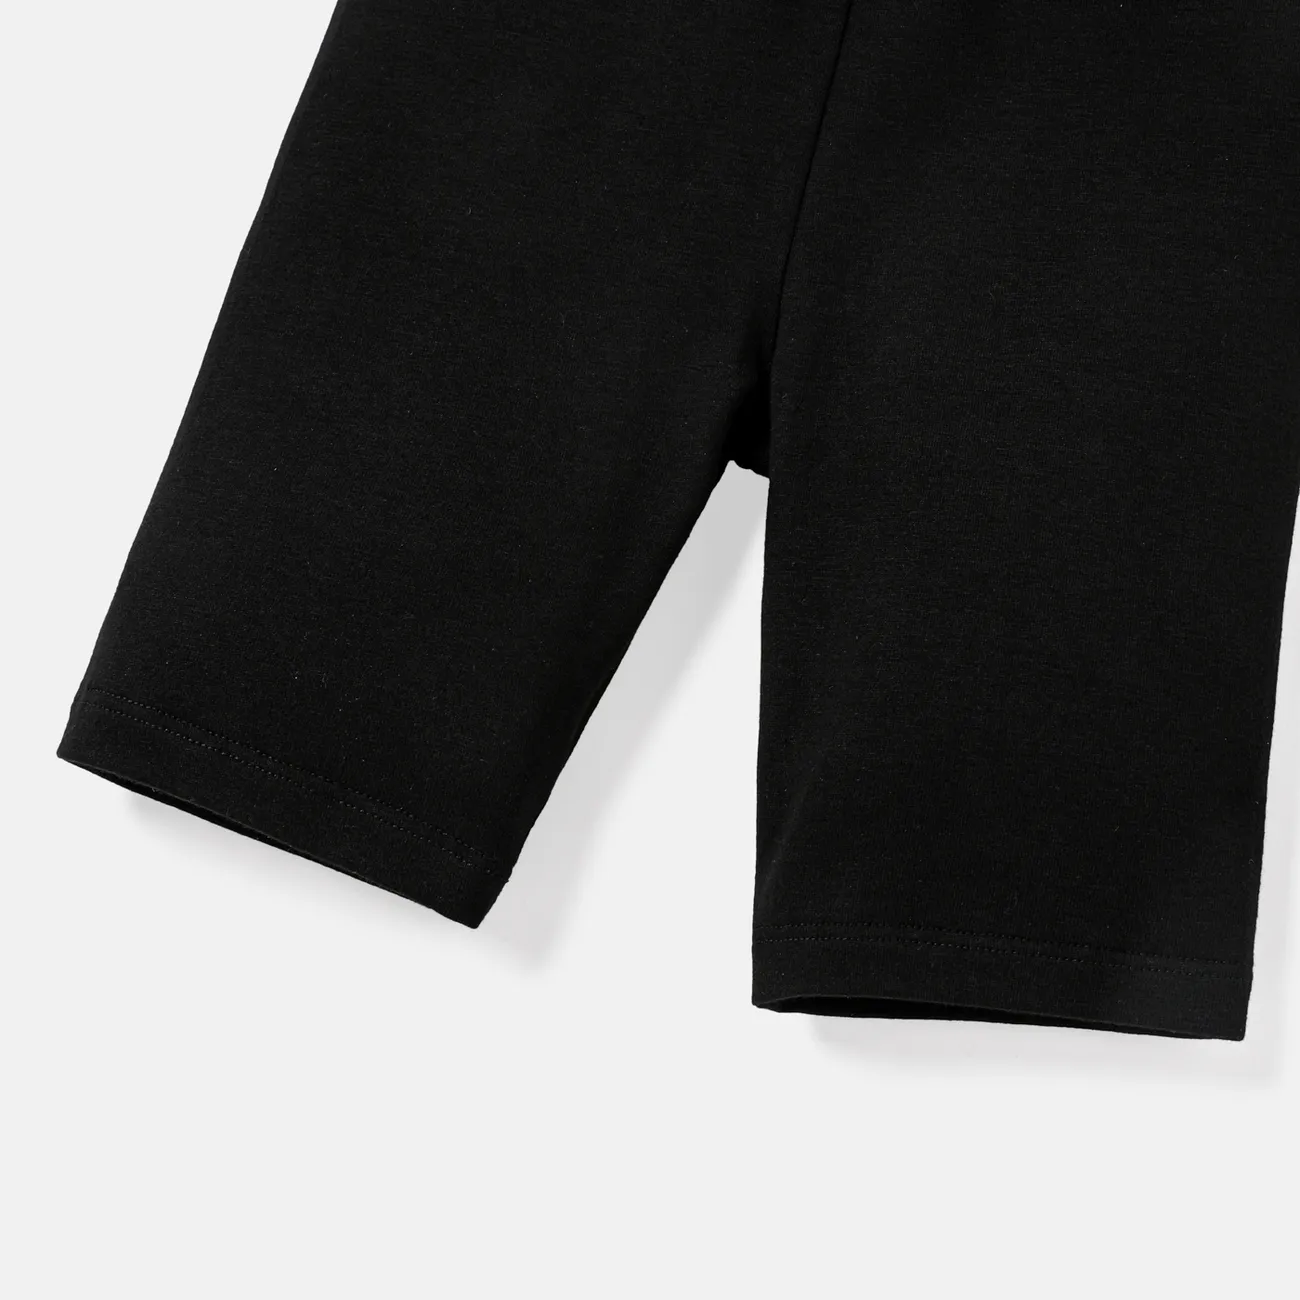 Pantalones cortos de algodón de color sólido para niña pequeña/niña Negro big image 1